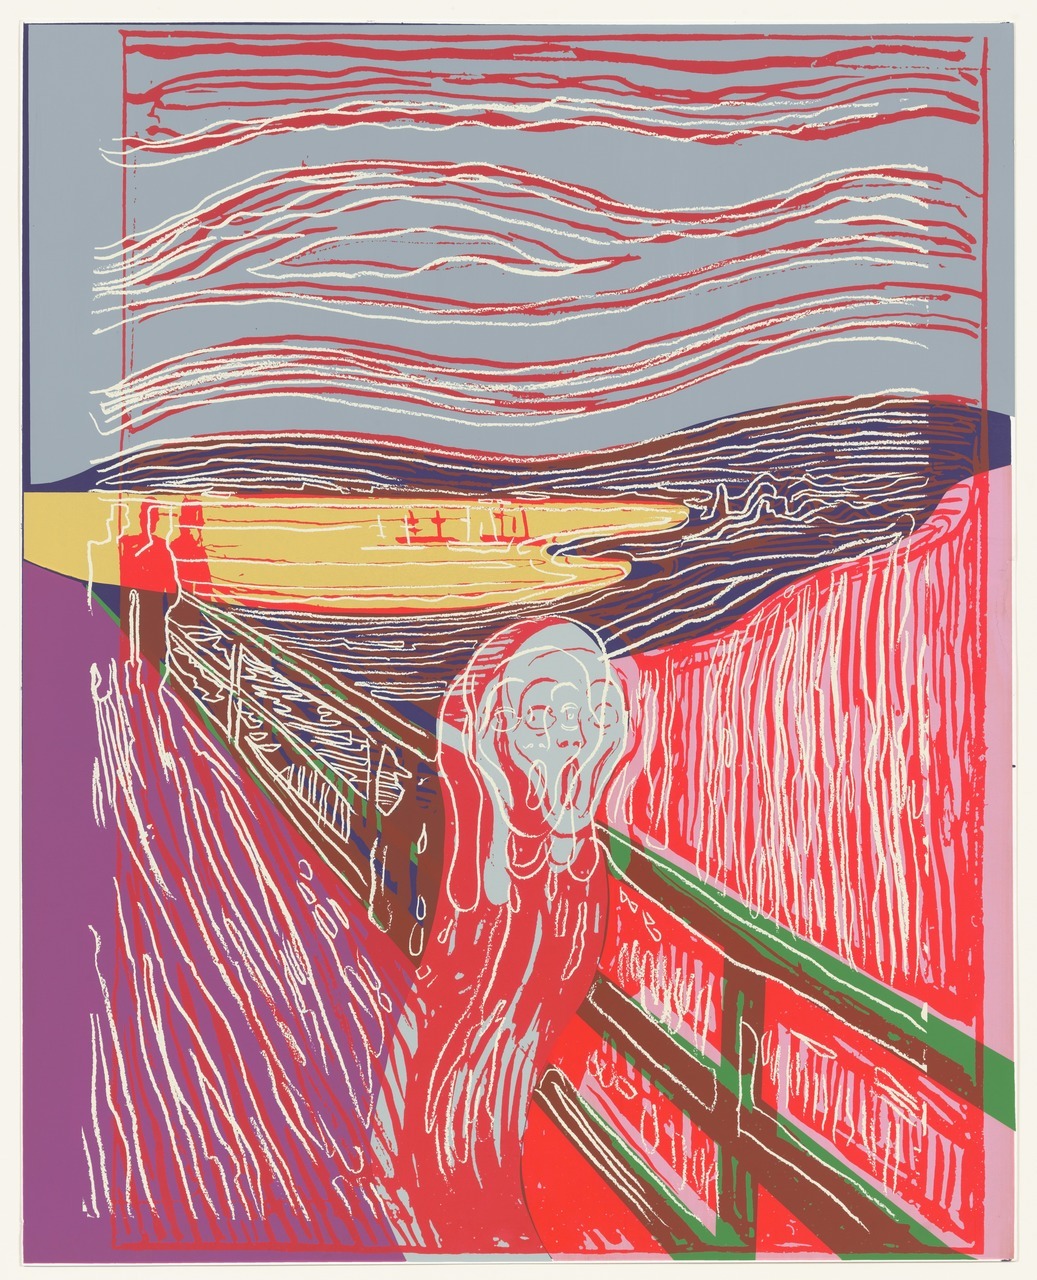 jimlovesart:

Andy Warhol - The Scream (after Munch), 1984. 
